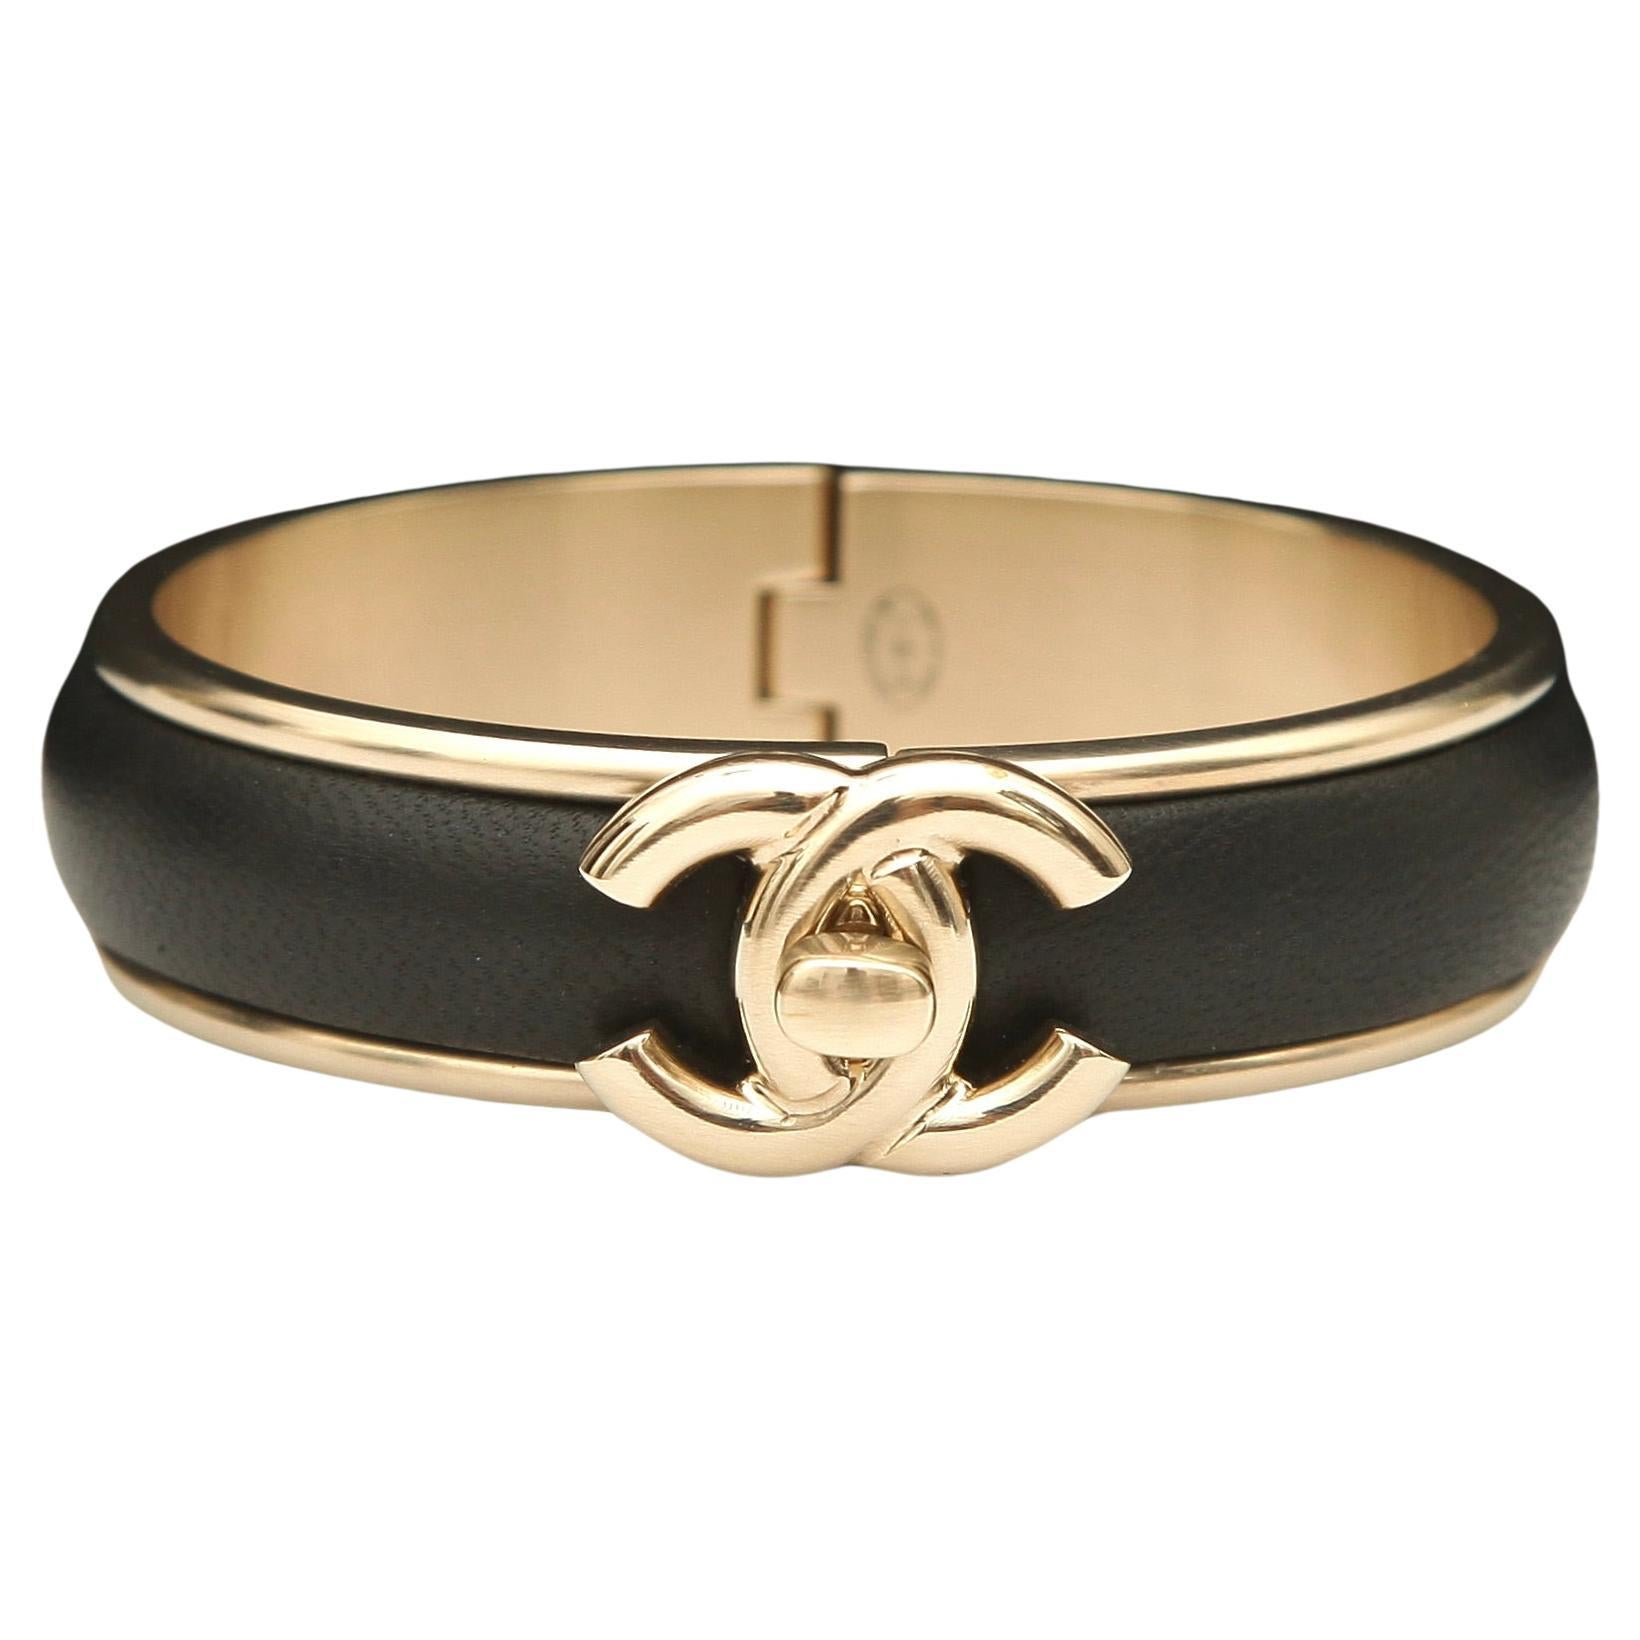 Chanel Black Leather Cuff Bracelet Bangle Gold HW CC Turnlock Narrow 21S 2021